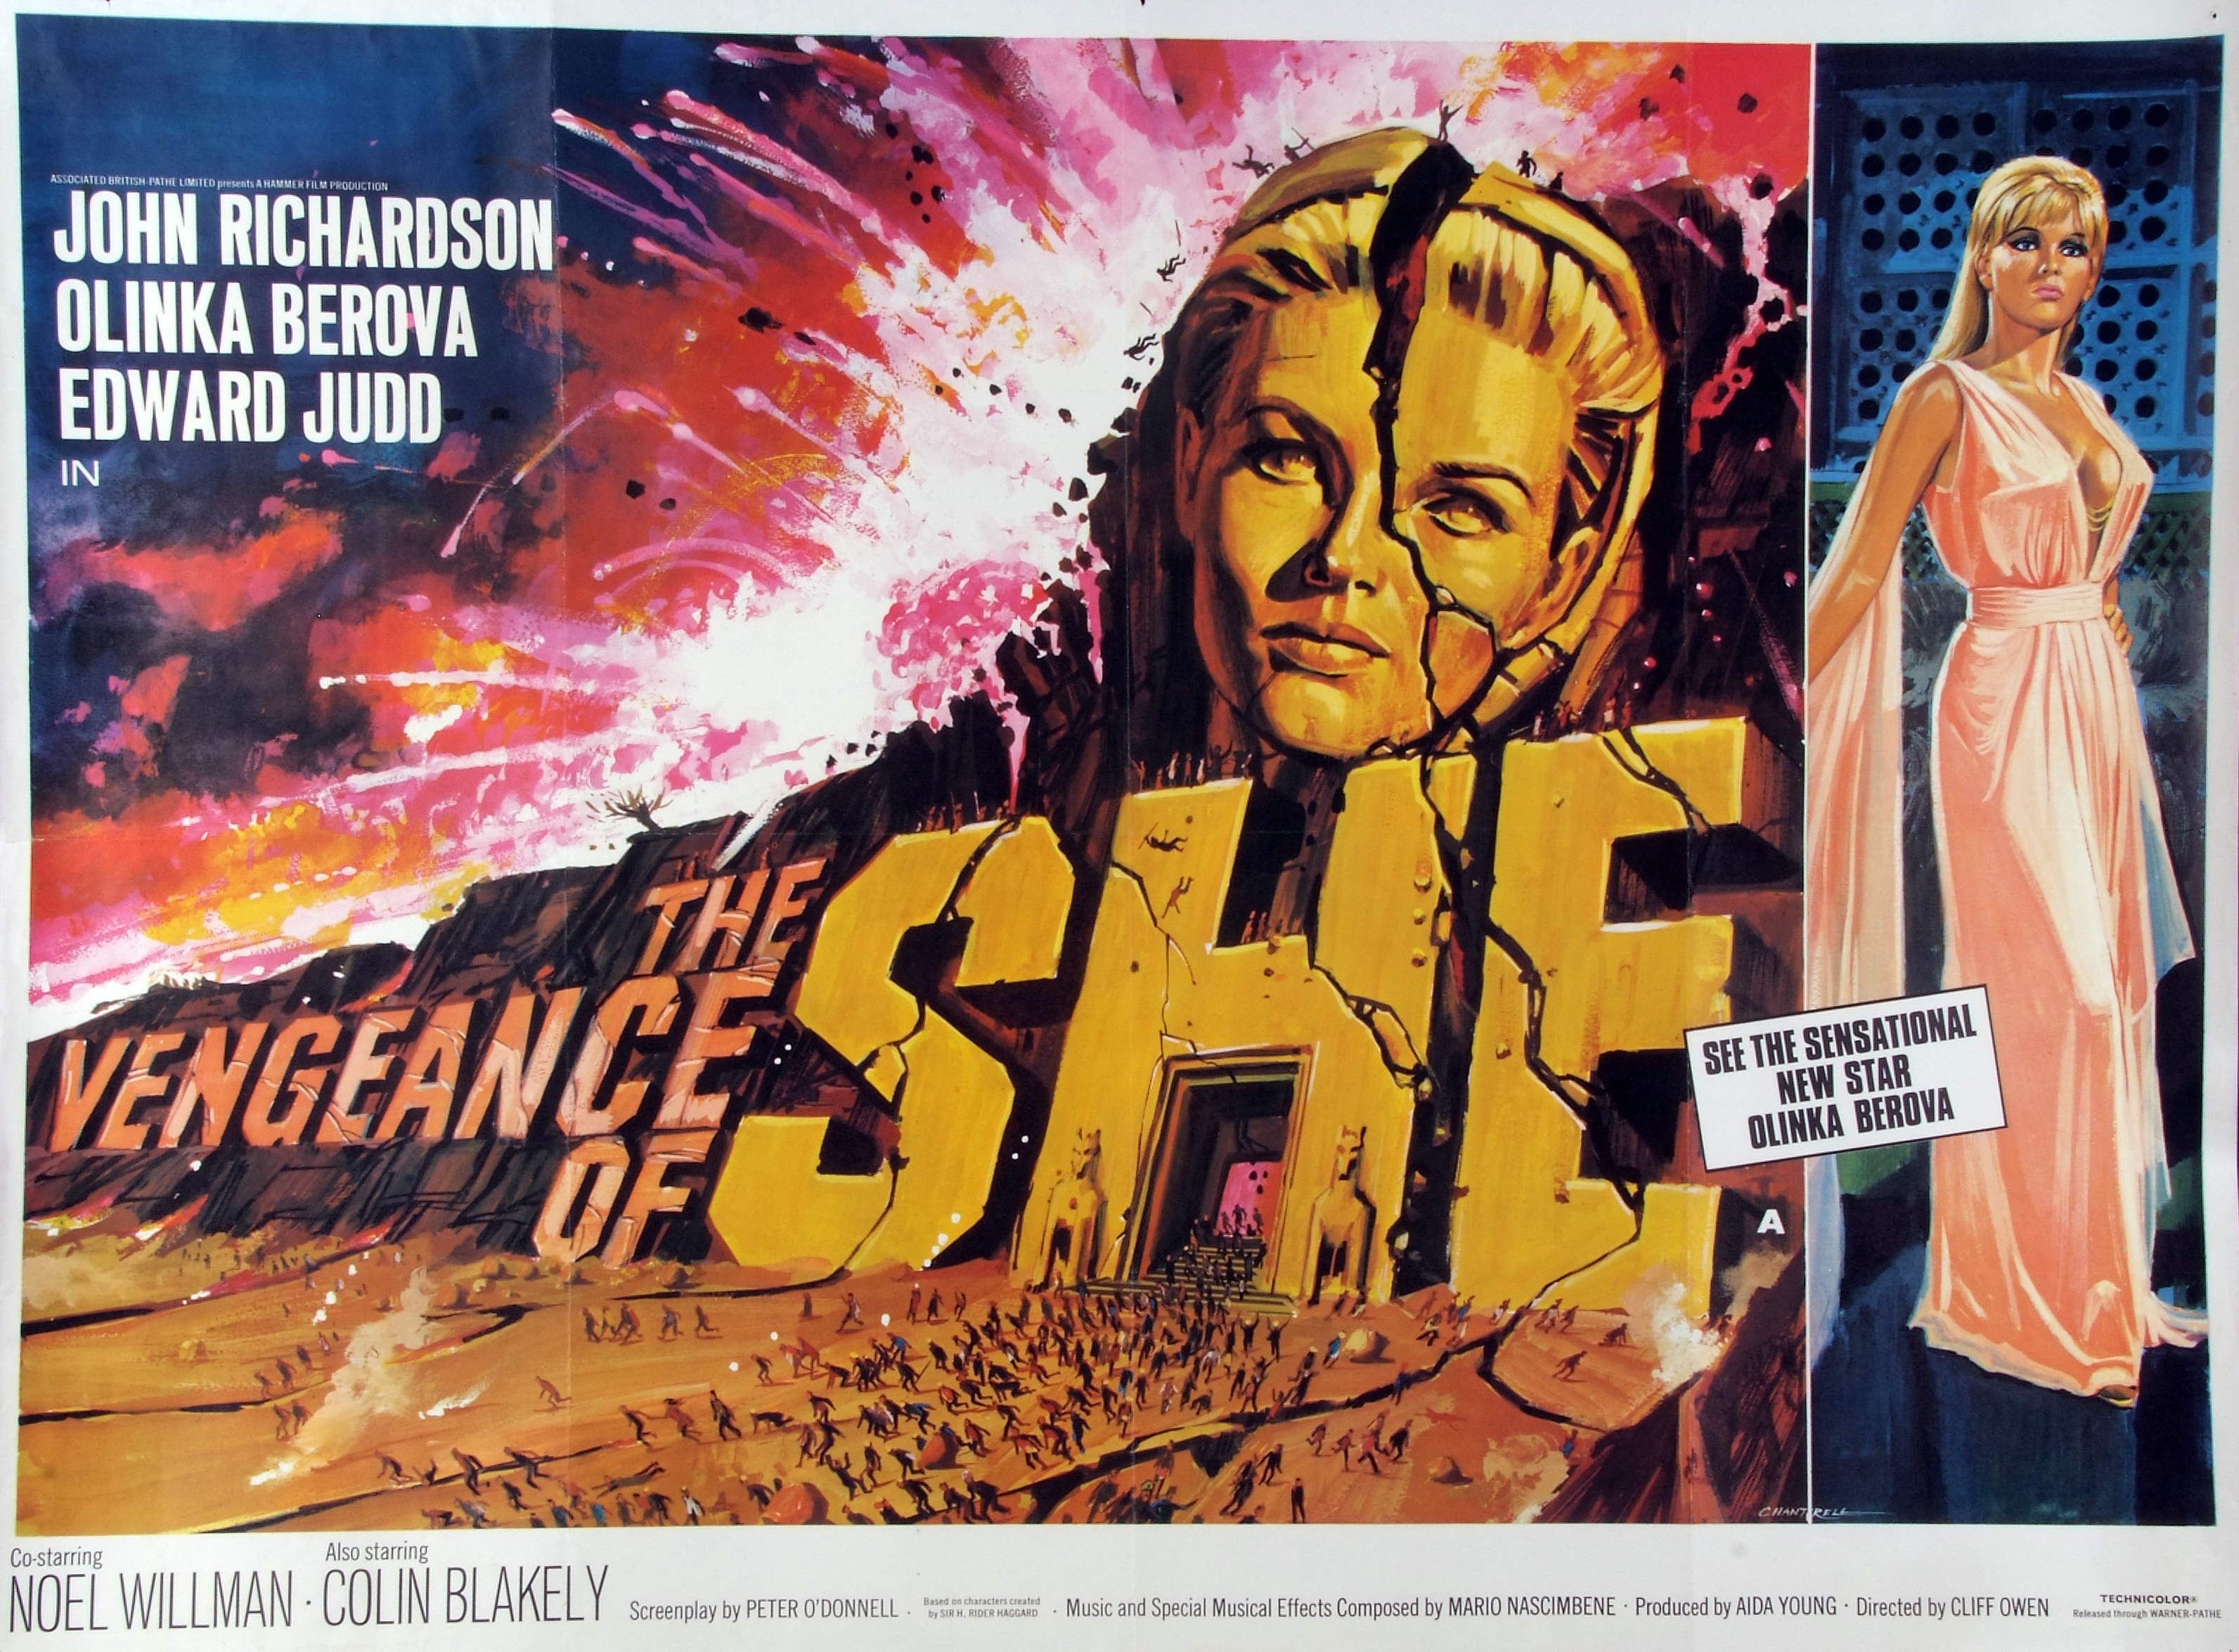 THE VENGEANCE OF SHE, film poster, starring John Richardson, Olinka Berova and Edward Judd, Quad